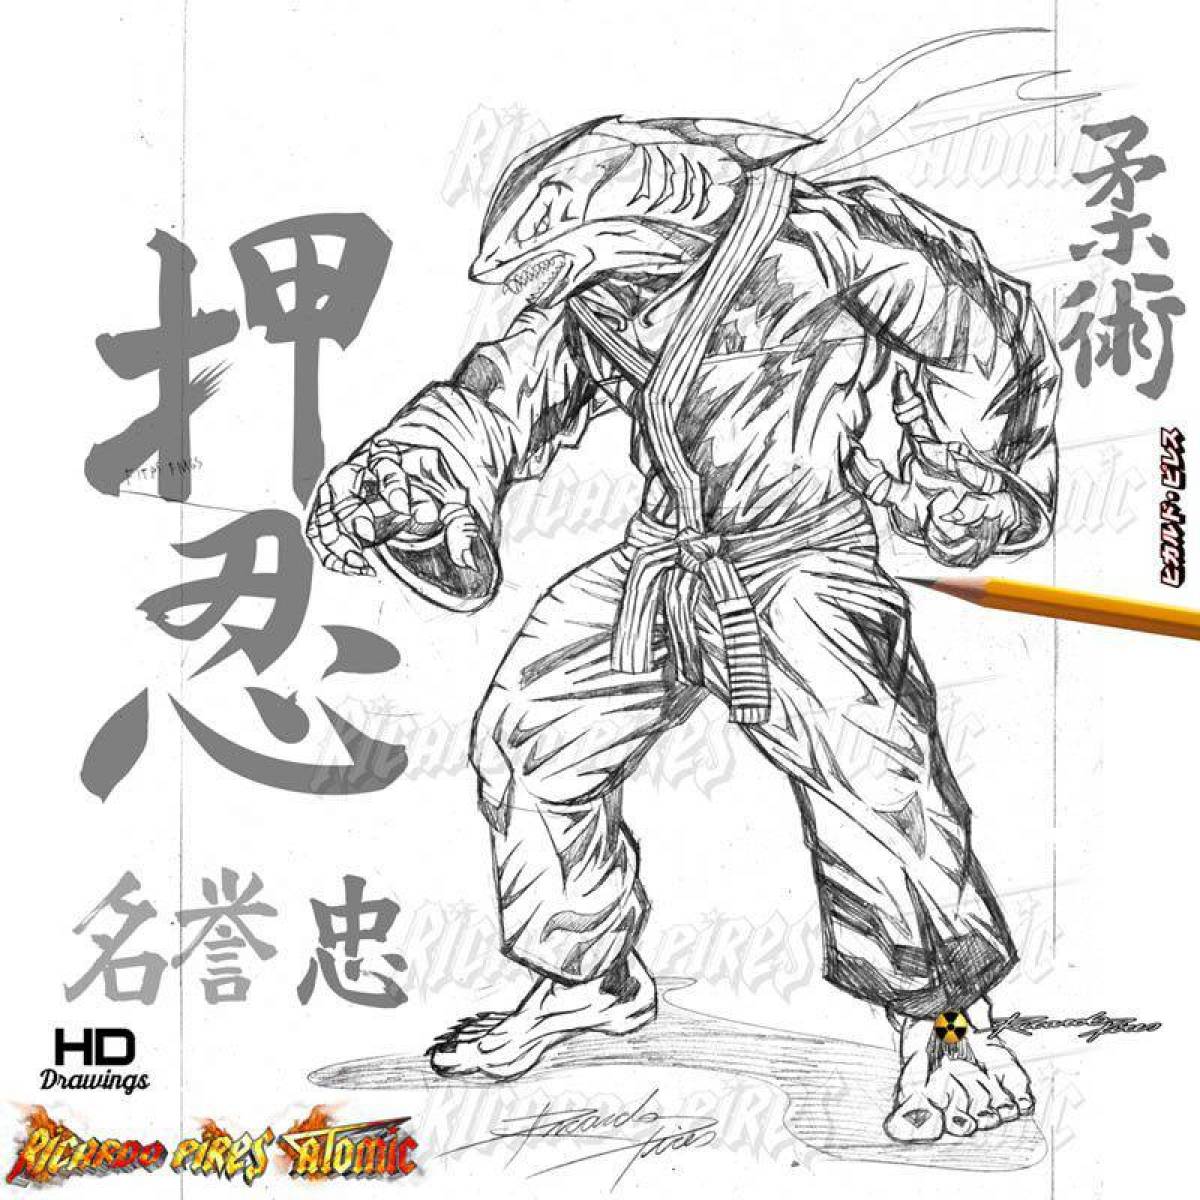 A fascinating picture of gujutsu